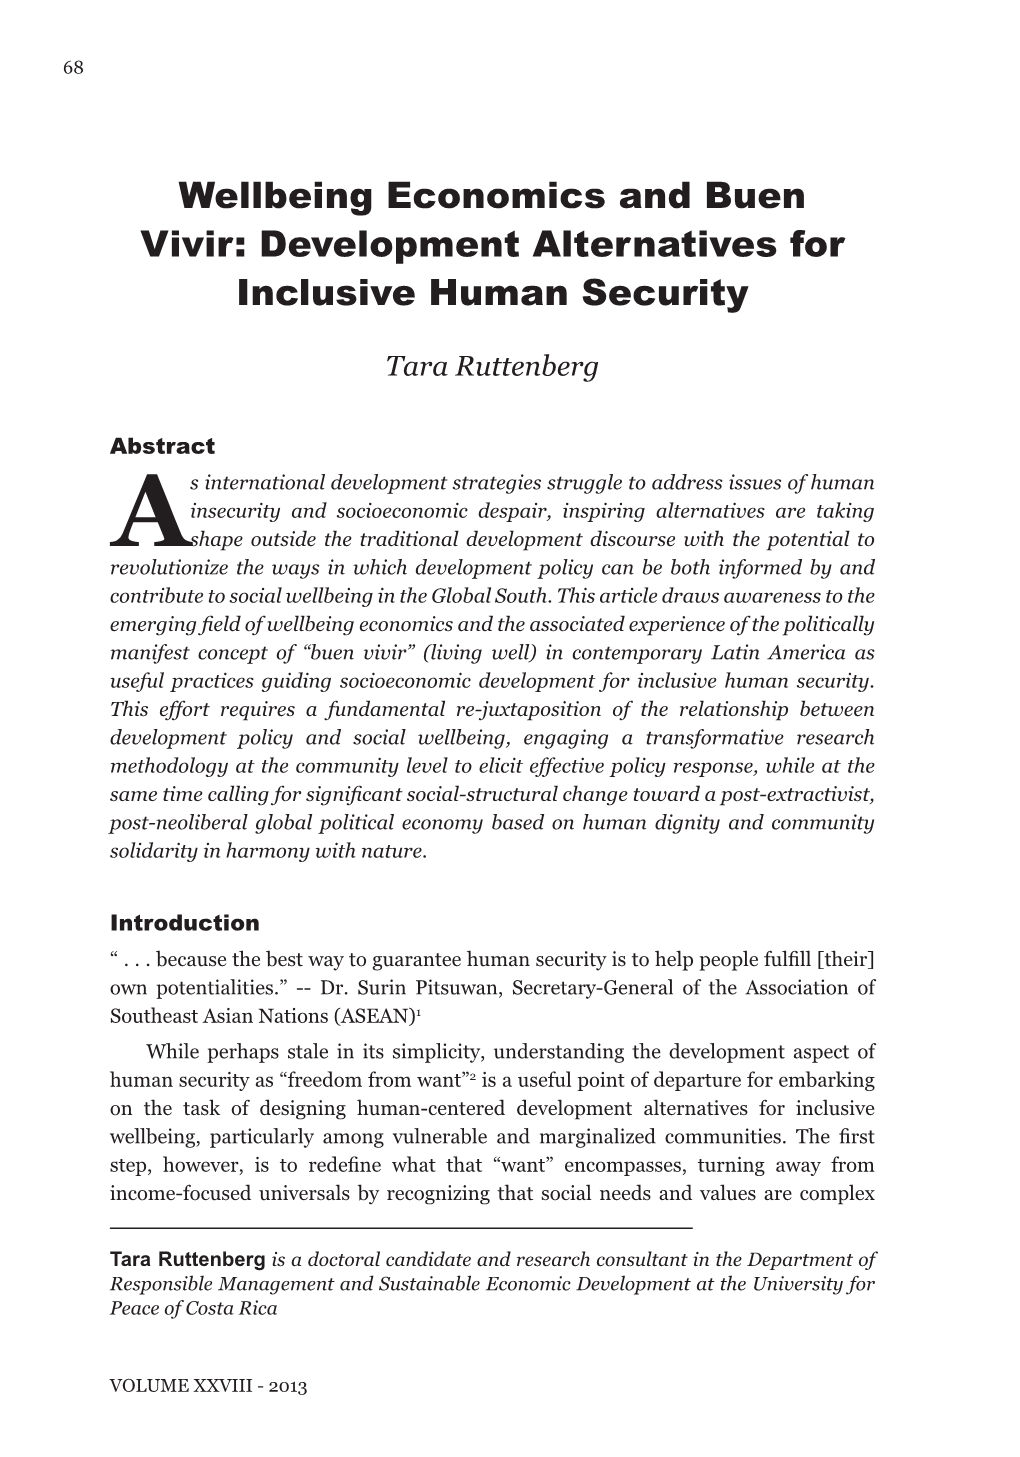 Wellbeing Economics and Buen Vivir: Development Alternatives for Inclusive Human Security